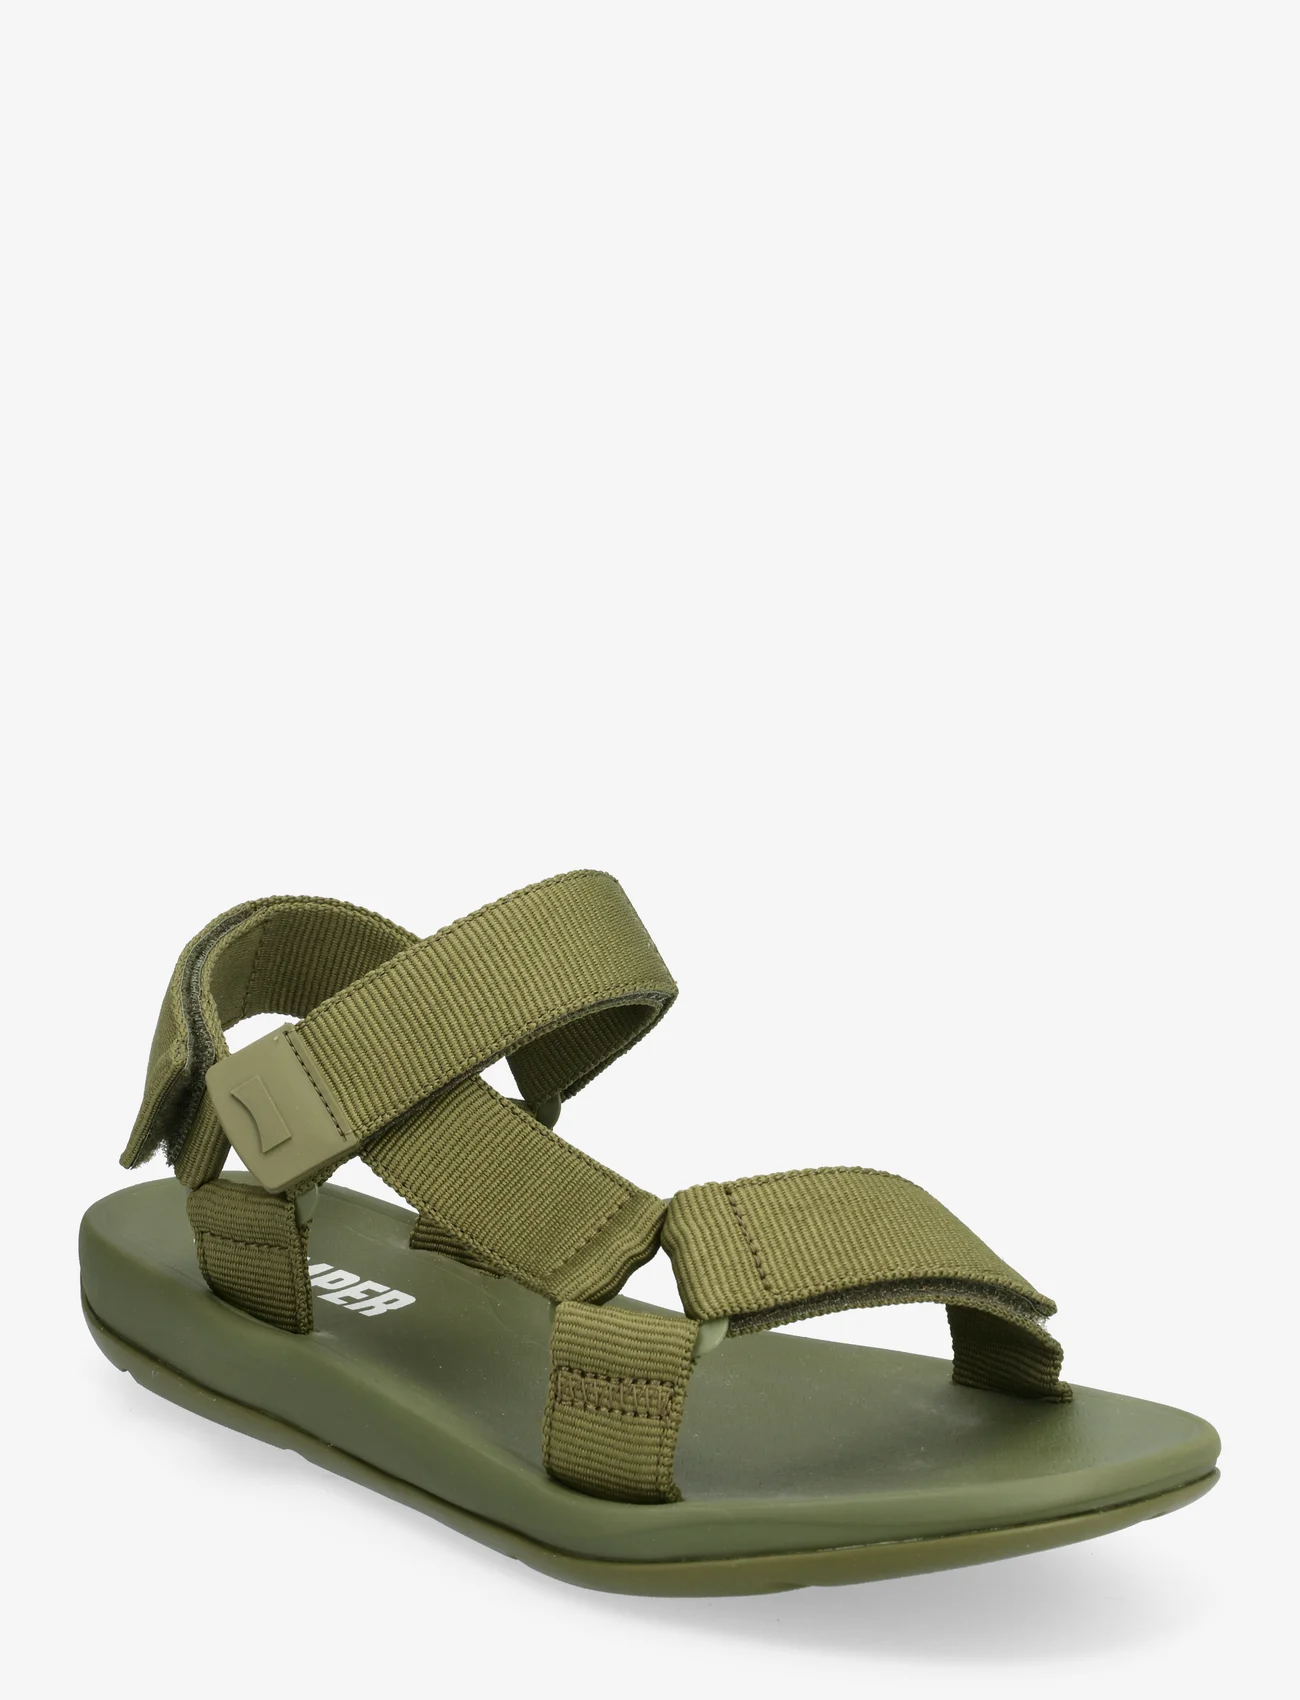 Camper - Match - sandaler - medium green - 0